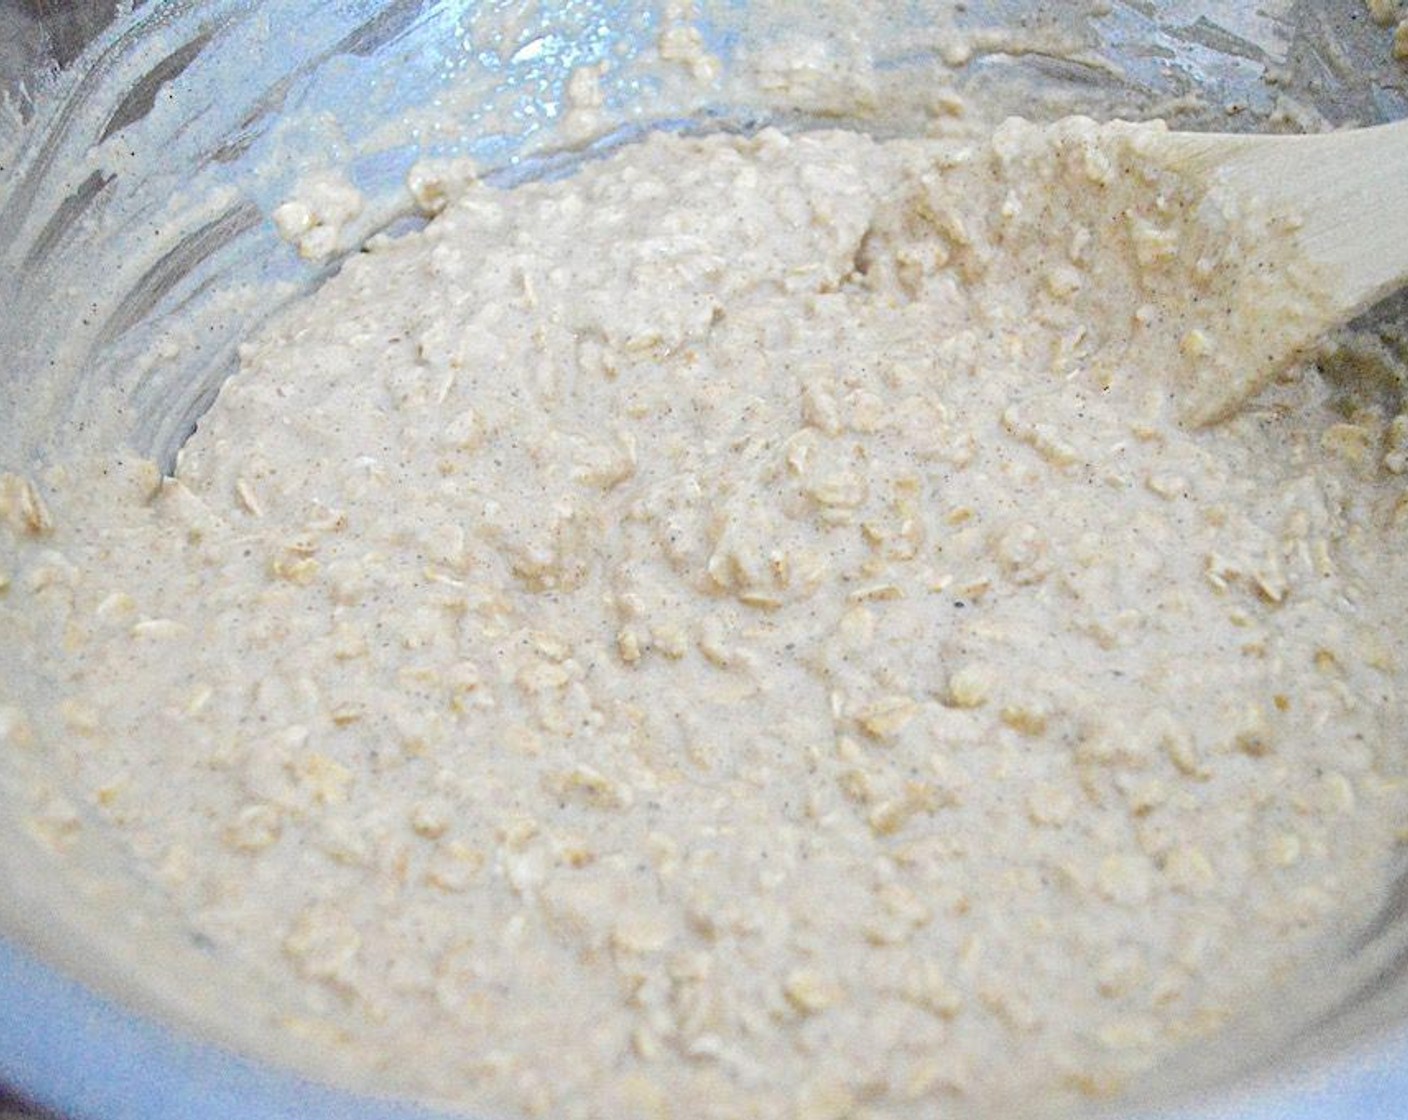 step 3 Add in the Apple Sauce (1 cup), Dark Brown Sugar (1 Tbsp), Baking Powder (1/2 Tbsp), Baking Soda (1 tsp), Ground Cinnamon (1/2 Tbsp), Salt (1/2 tsp) and Ground Nutmeg (1/2 tsp). Stir it all together well.